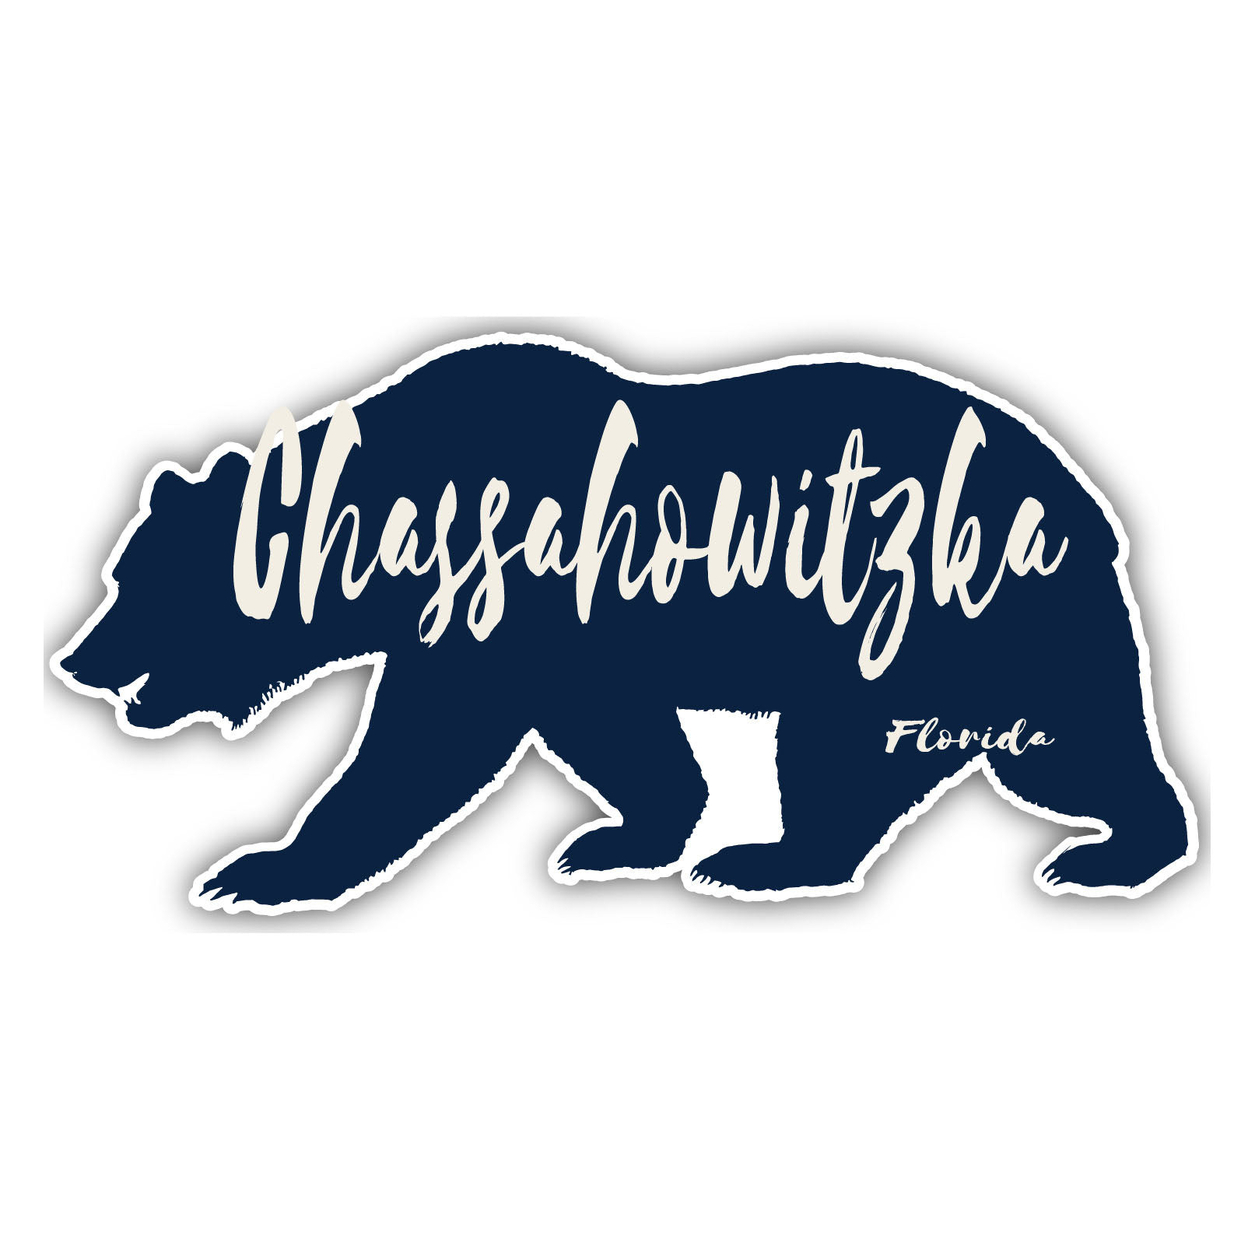 Chassahowitzka Florida Souvenir Decorative Stickers (Choose Theme And Size) - 4-Pack, 4-Inch, Bear